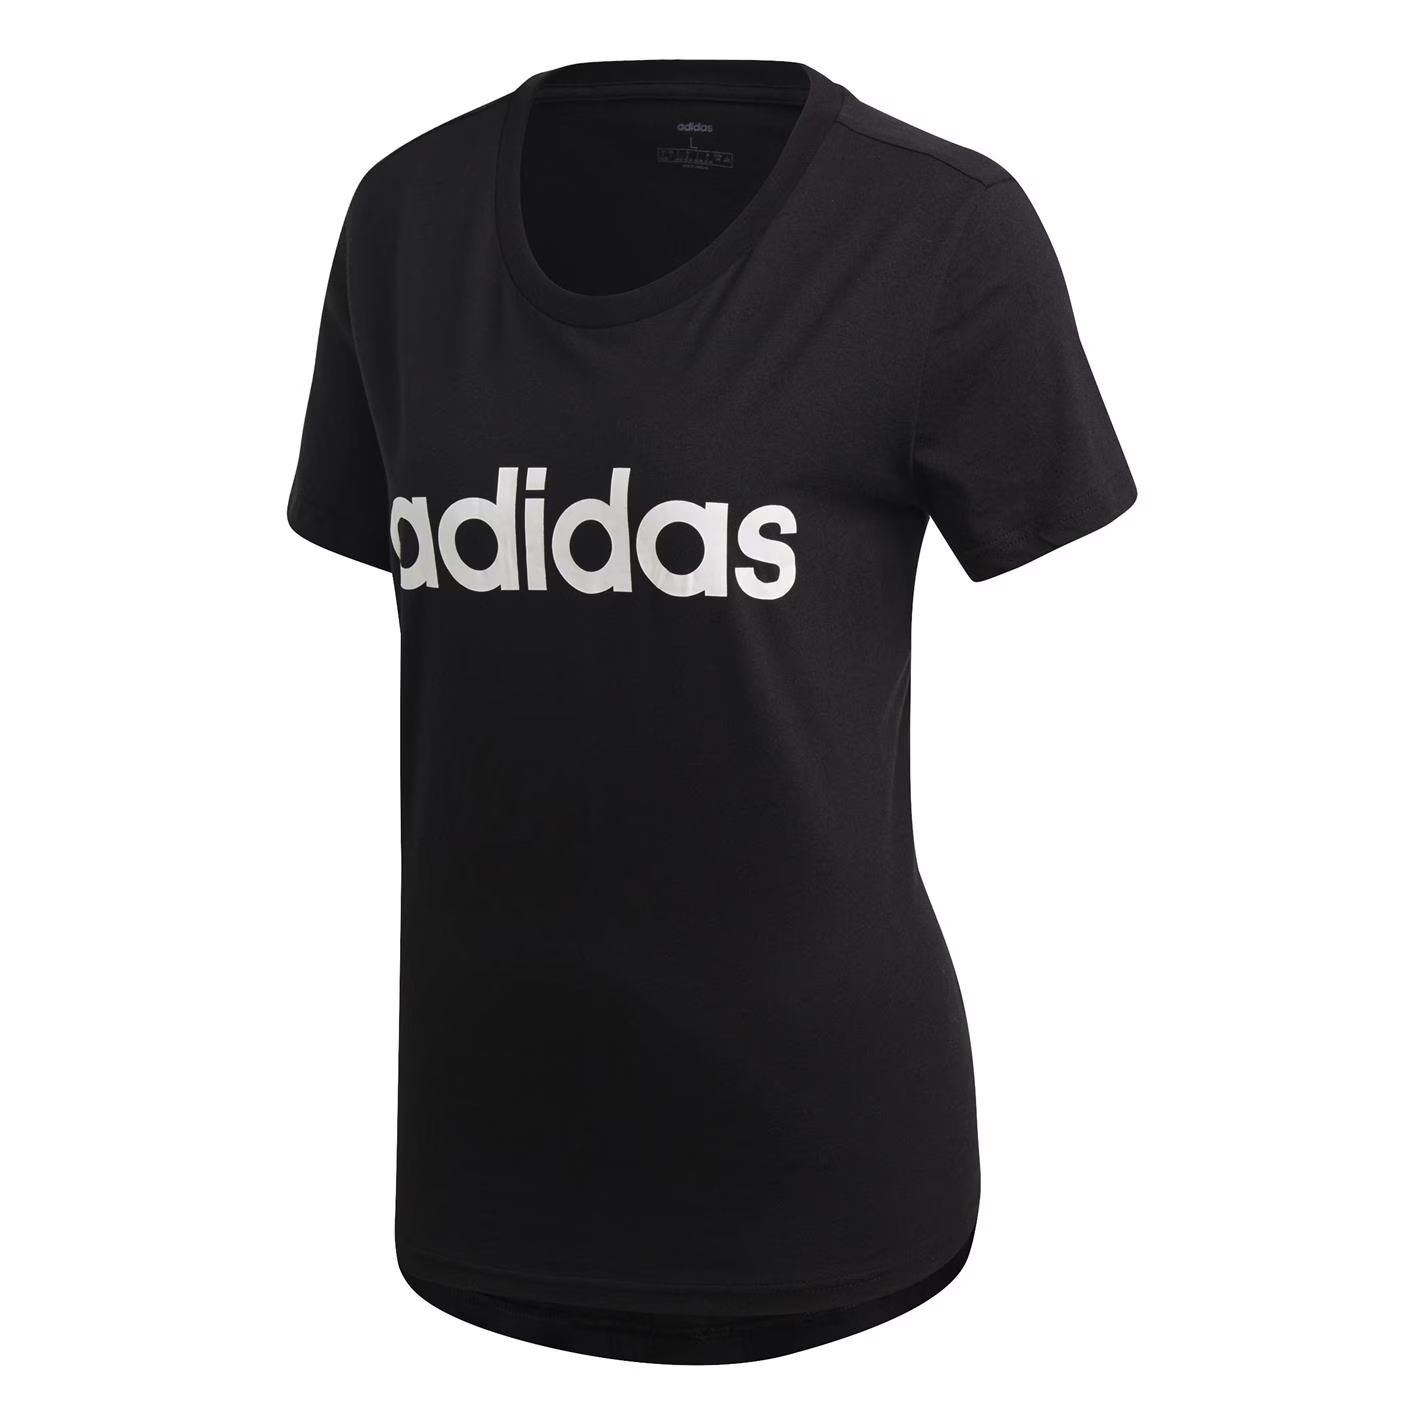 dámské tričko ADIDAS - BLACK/WHITE - S